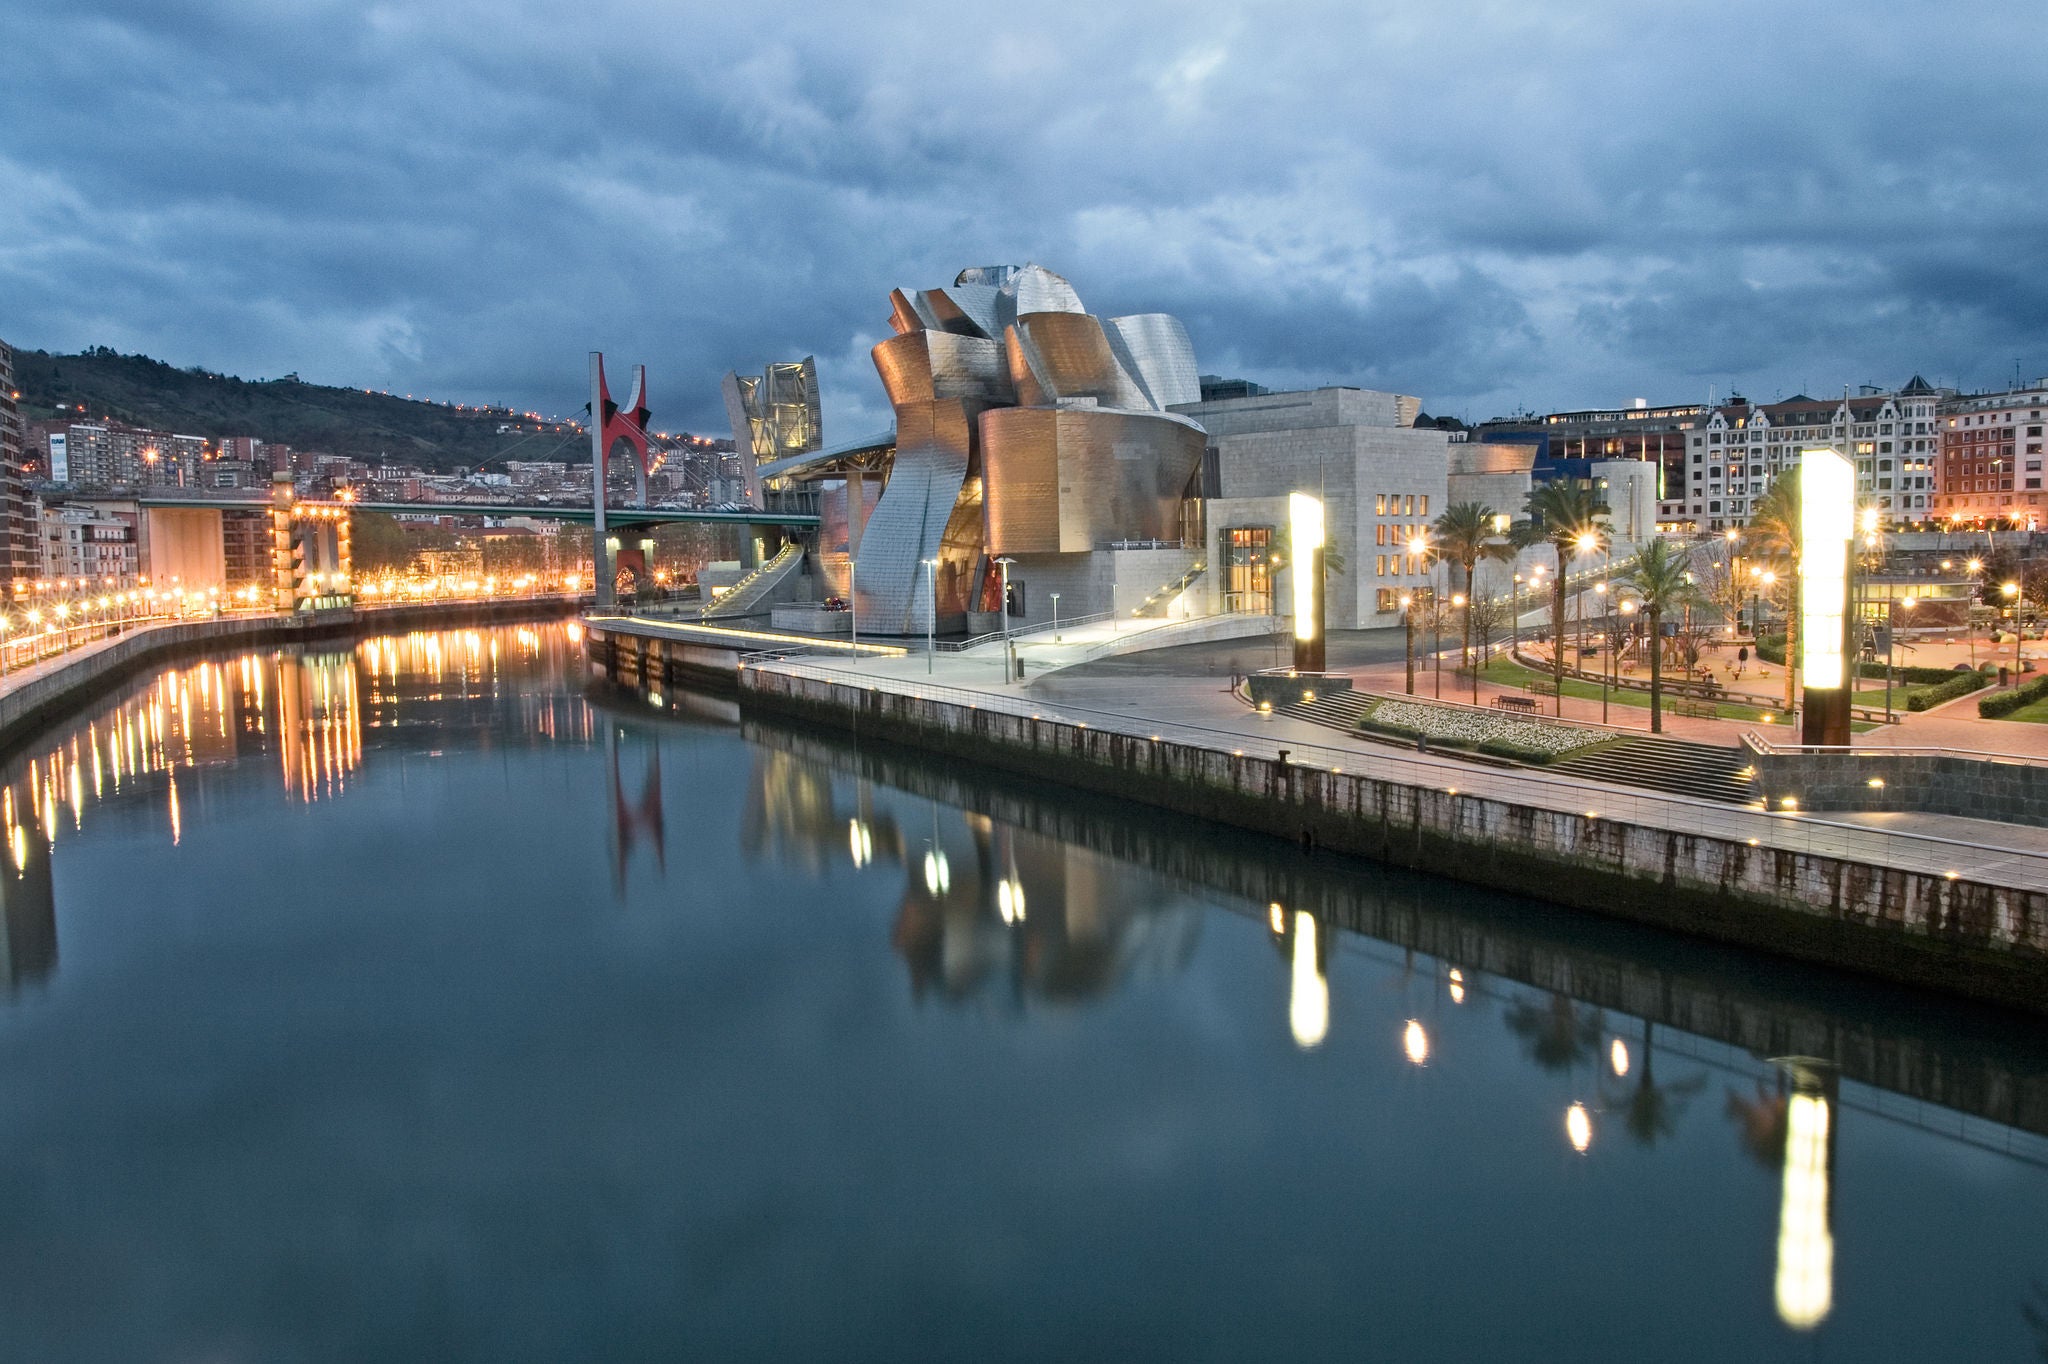  Guggenheim-museet i Bilbao